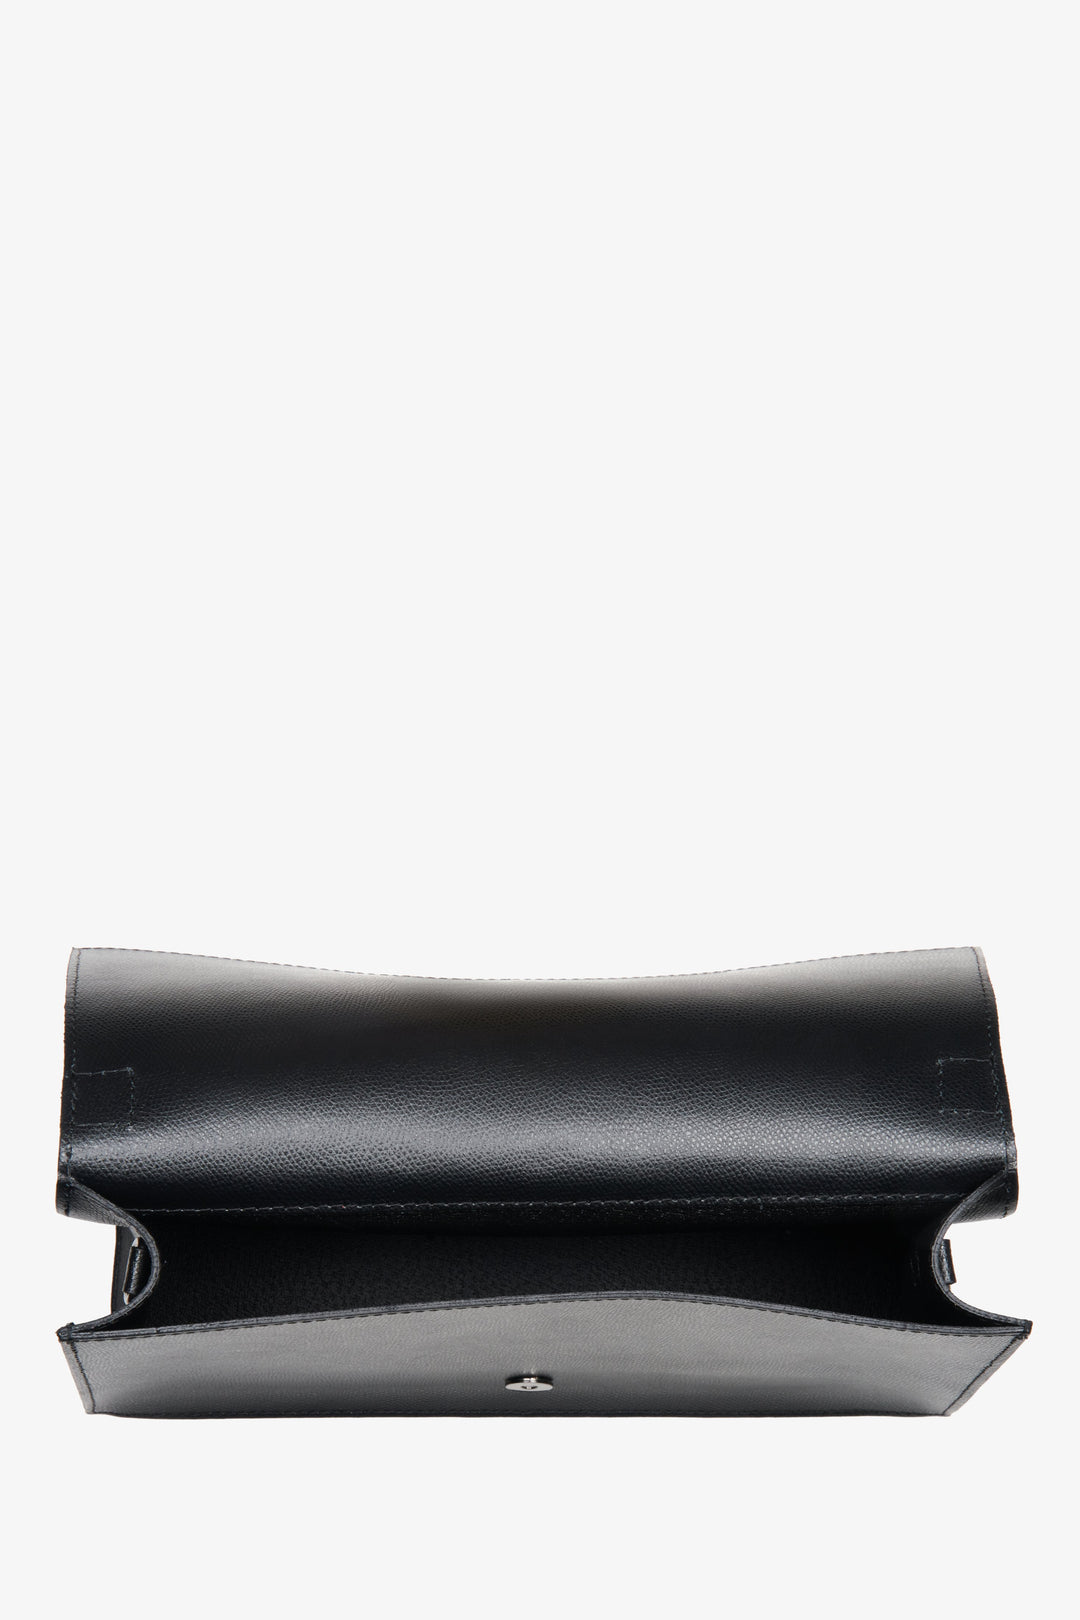 Women's small black leather handbag by Estro - interior of the model.